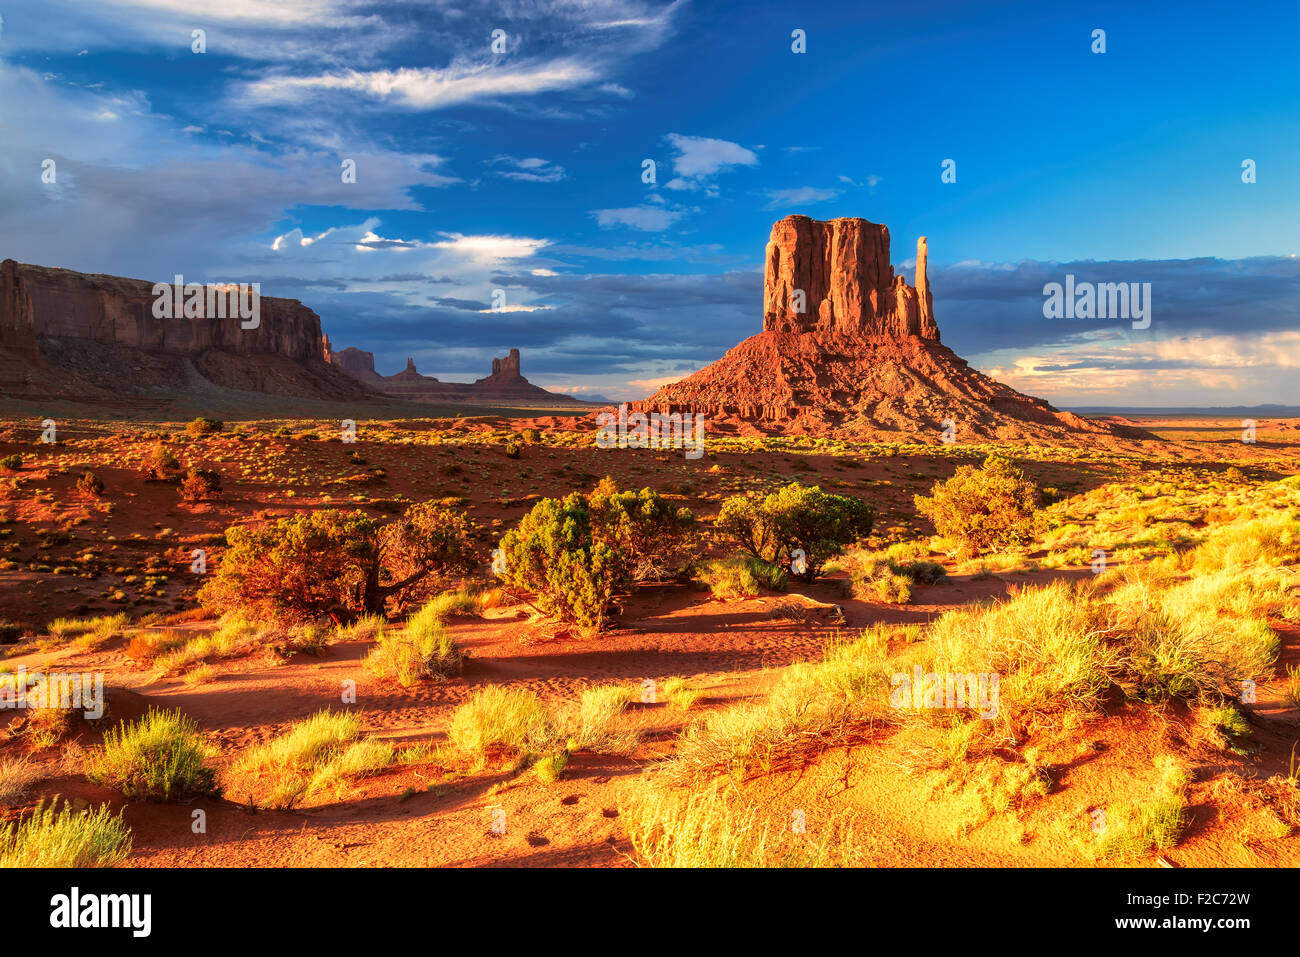 The unique landscape of Monument Valley, Arizona, USA. Stock Photo